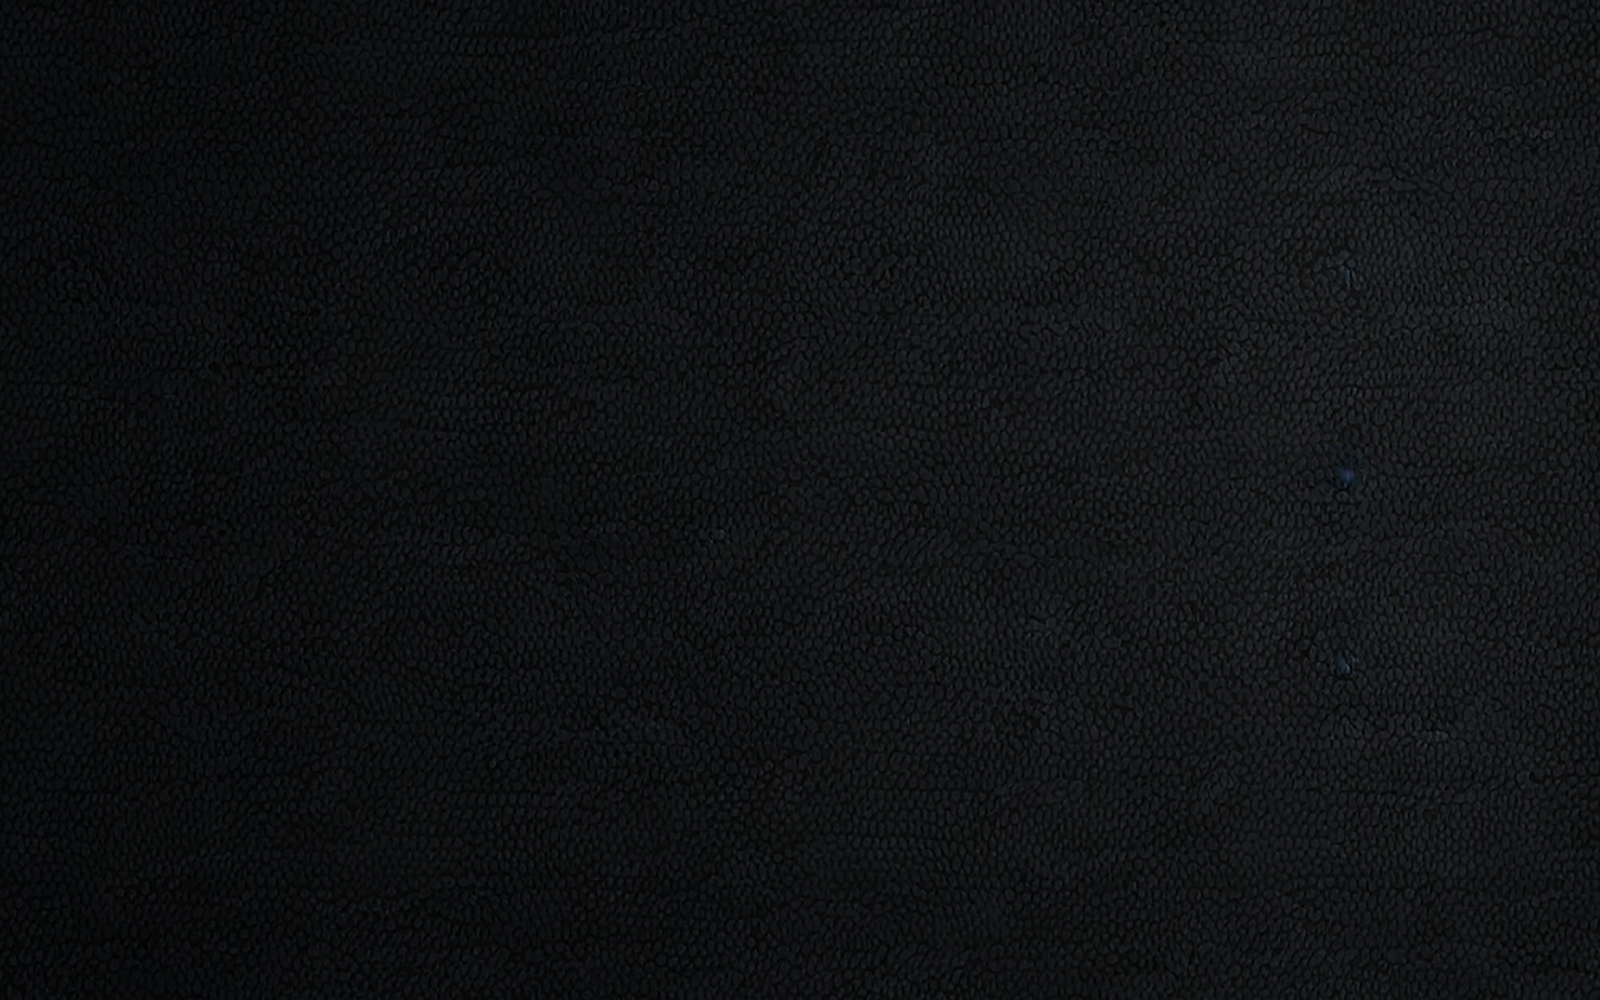 Black Leather | Black Textured Leather Background | Black Textured Wall Background